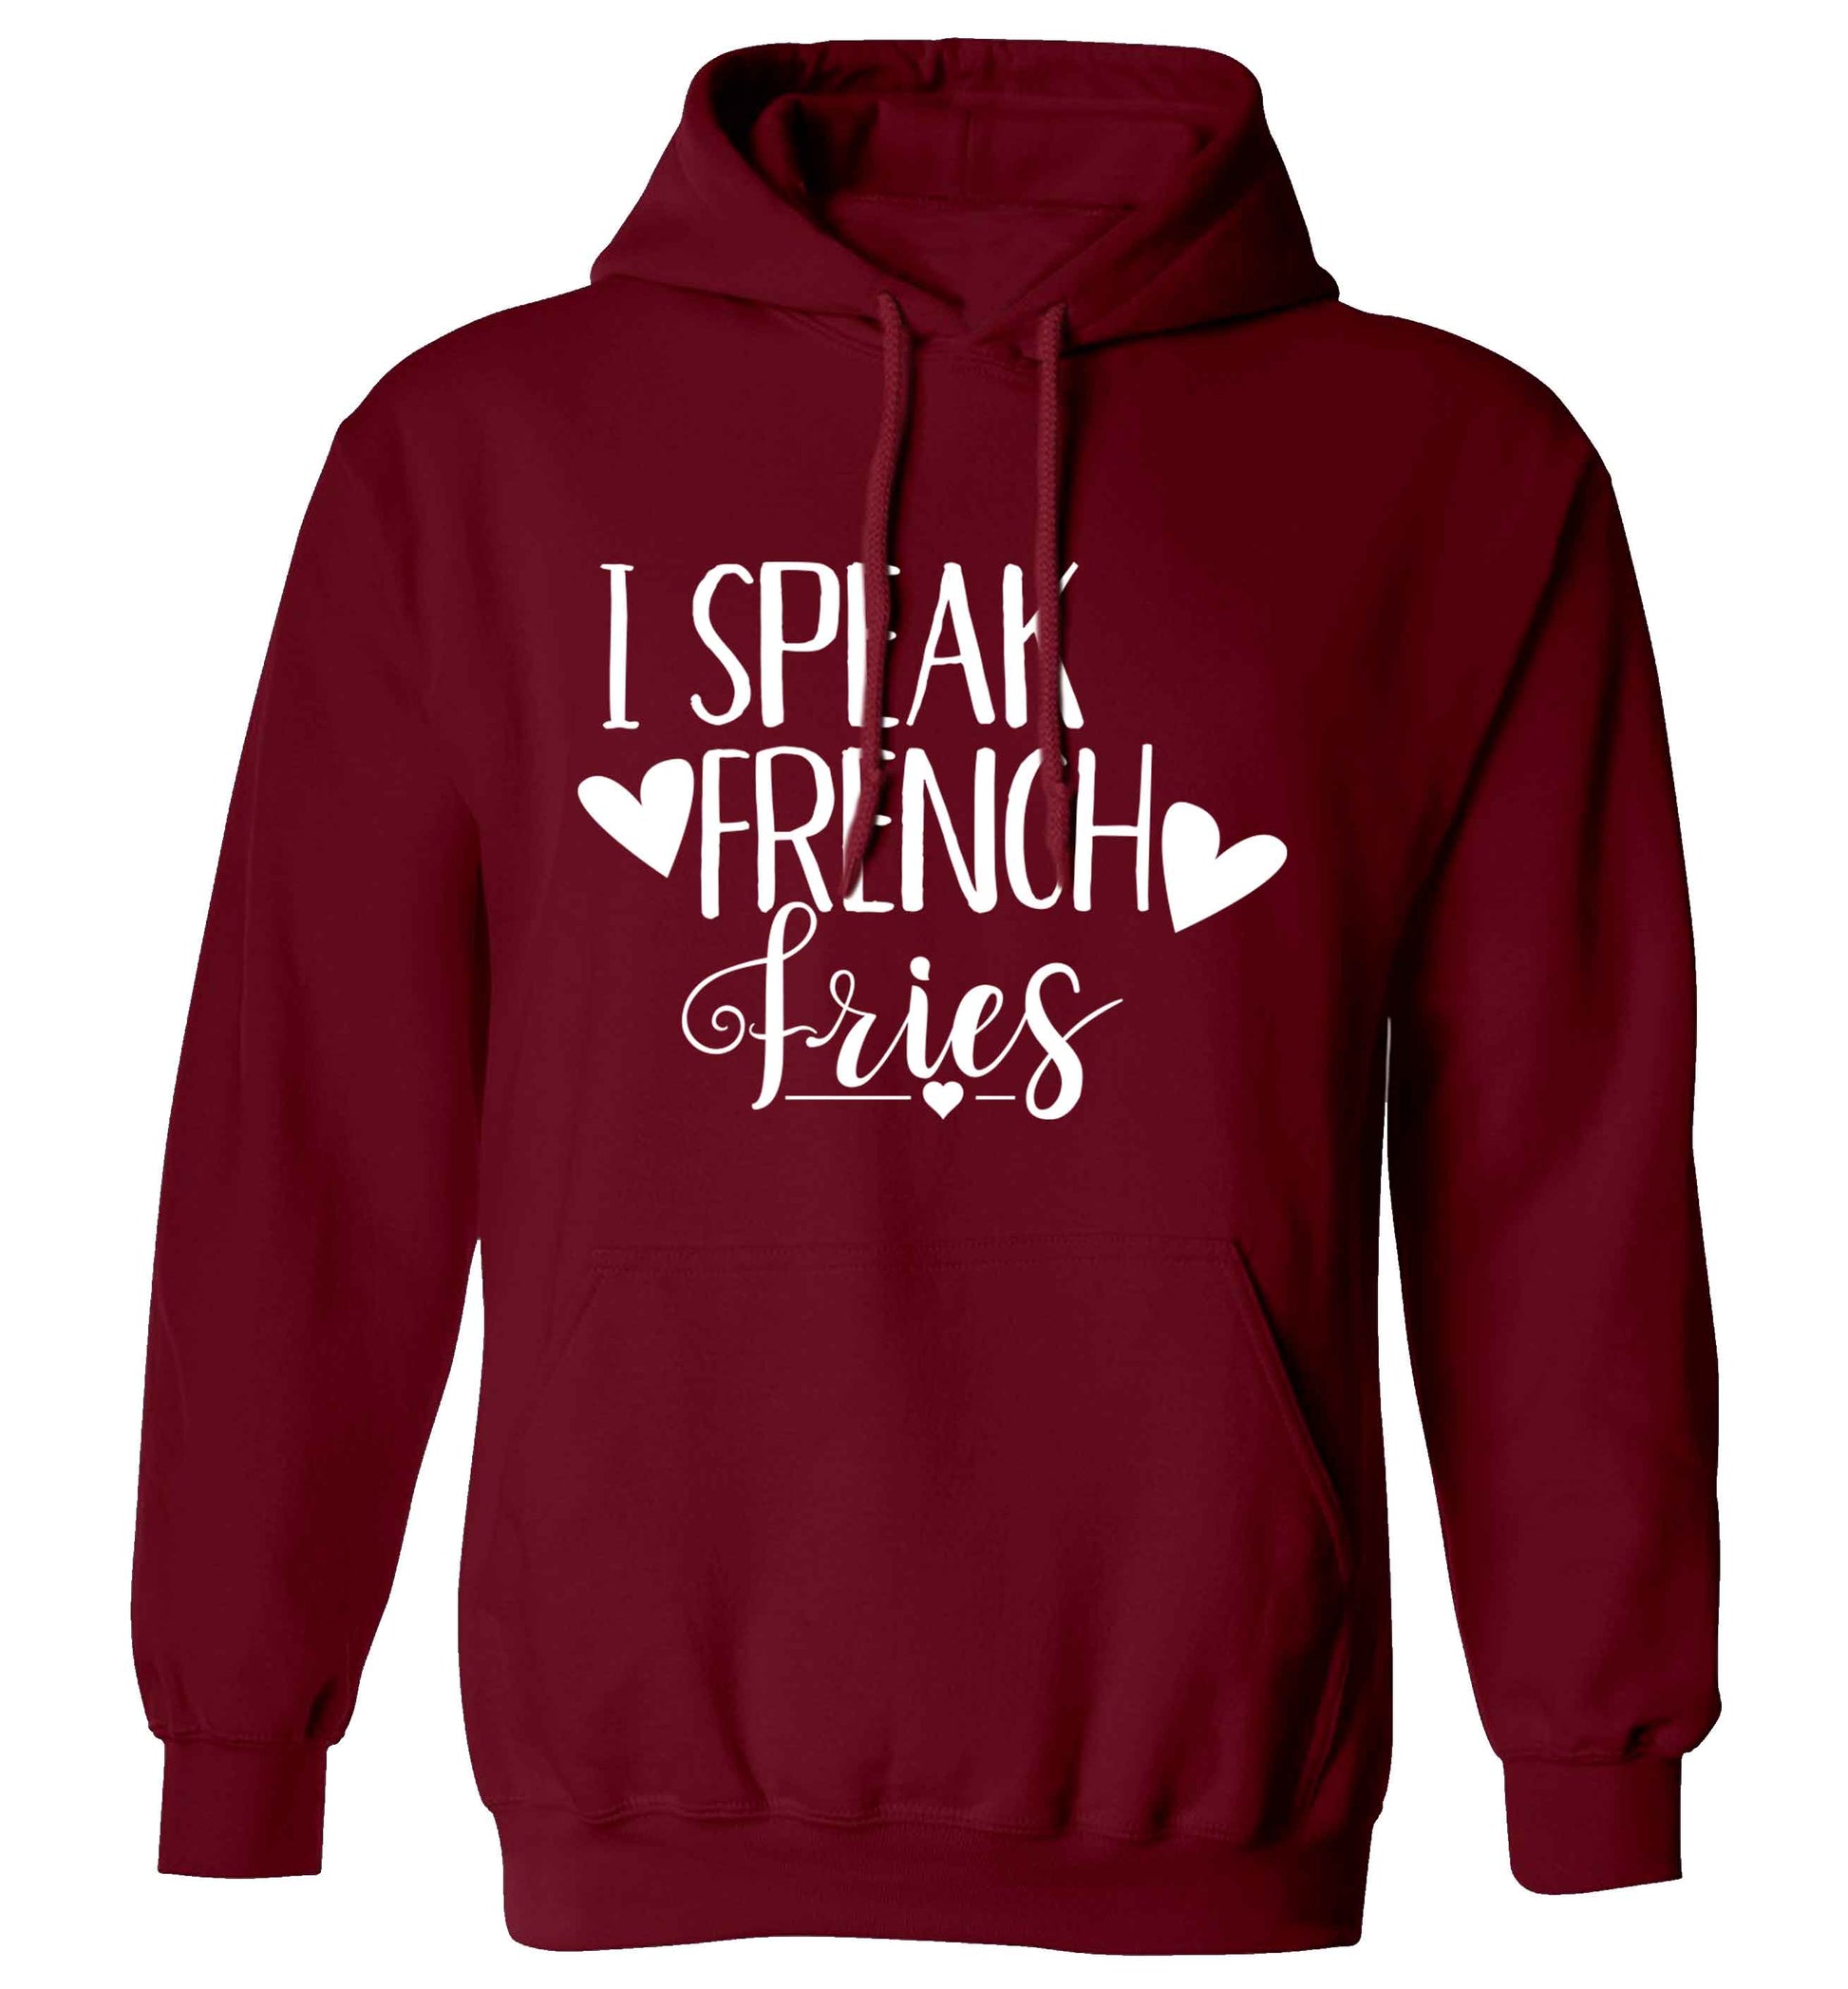 I speak French fries adults unisex maroon hoodie 2XL